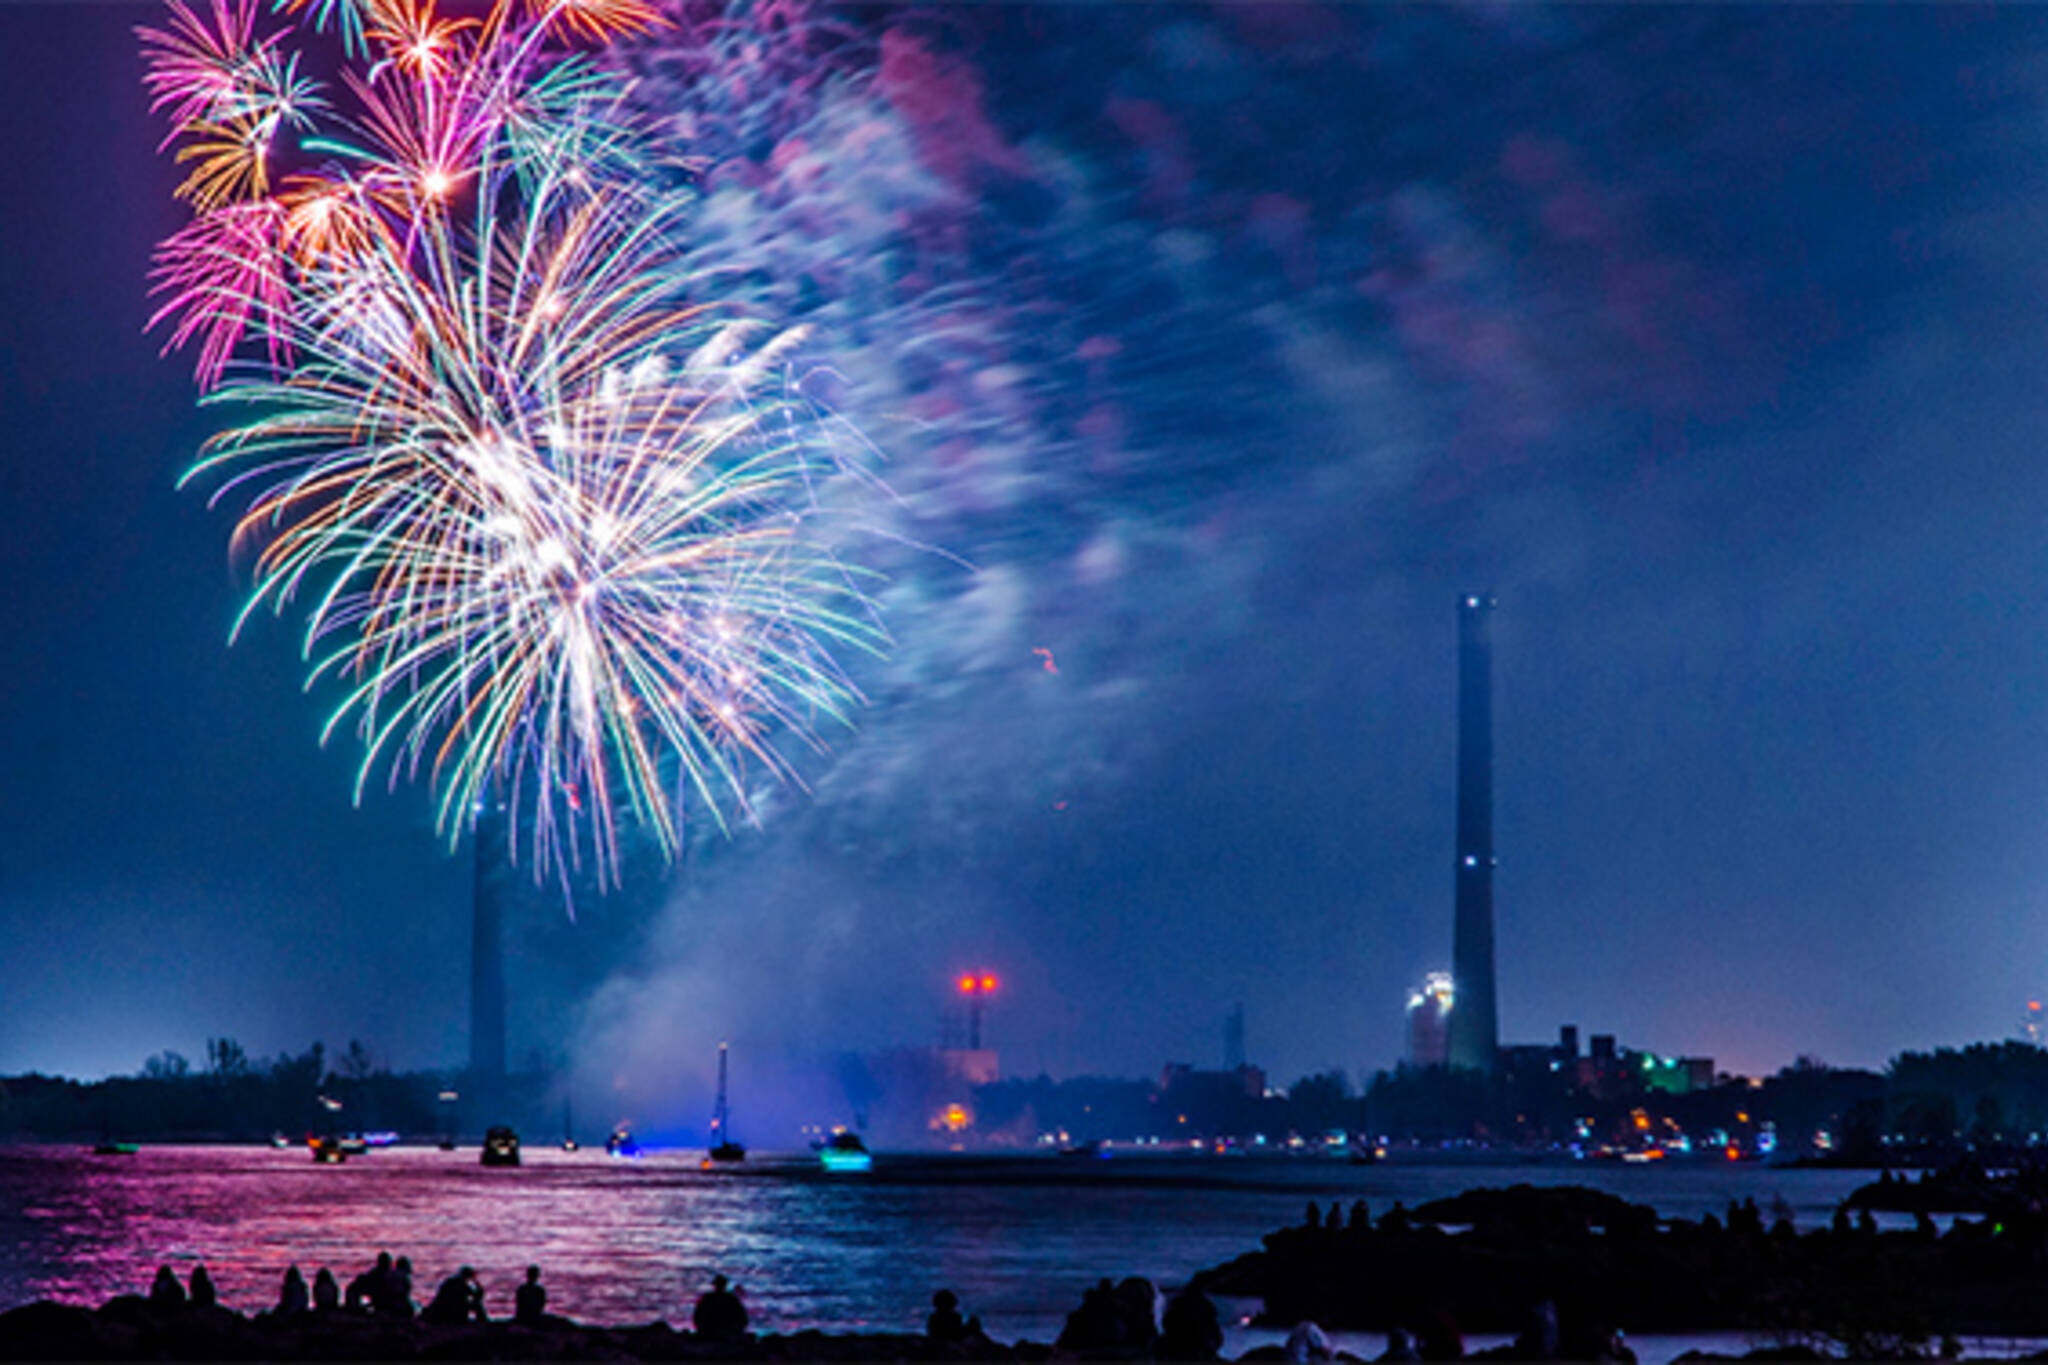 Victoria Day fireworks in Toronto 2016